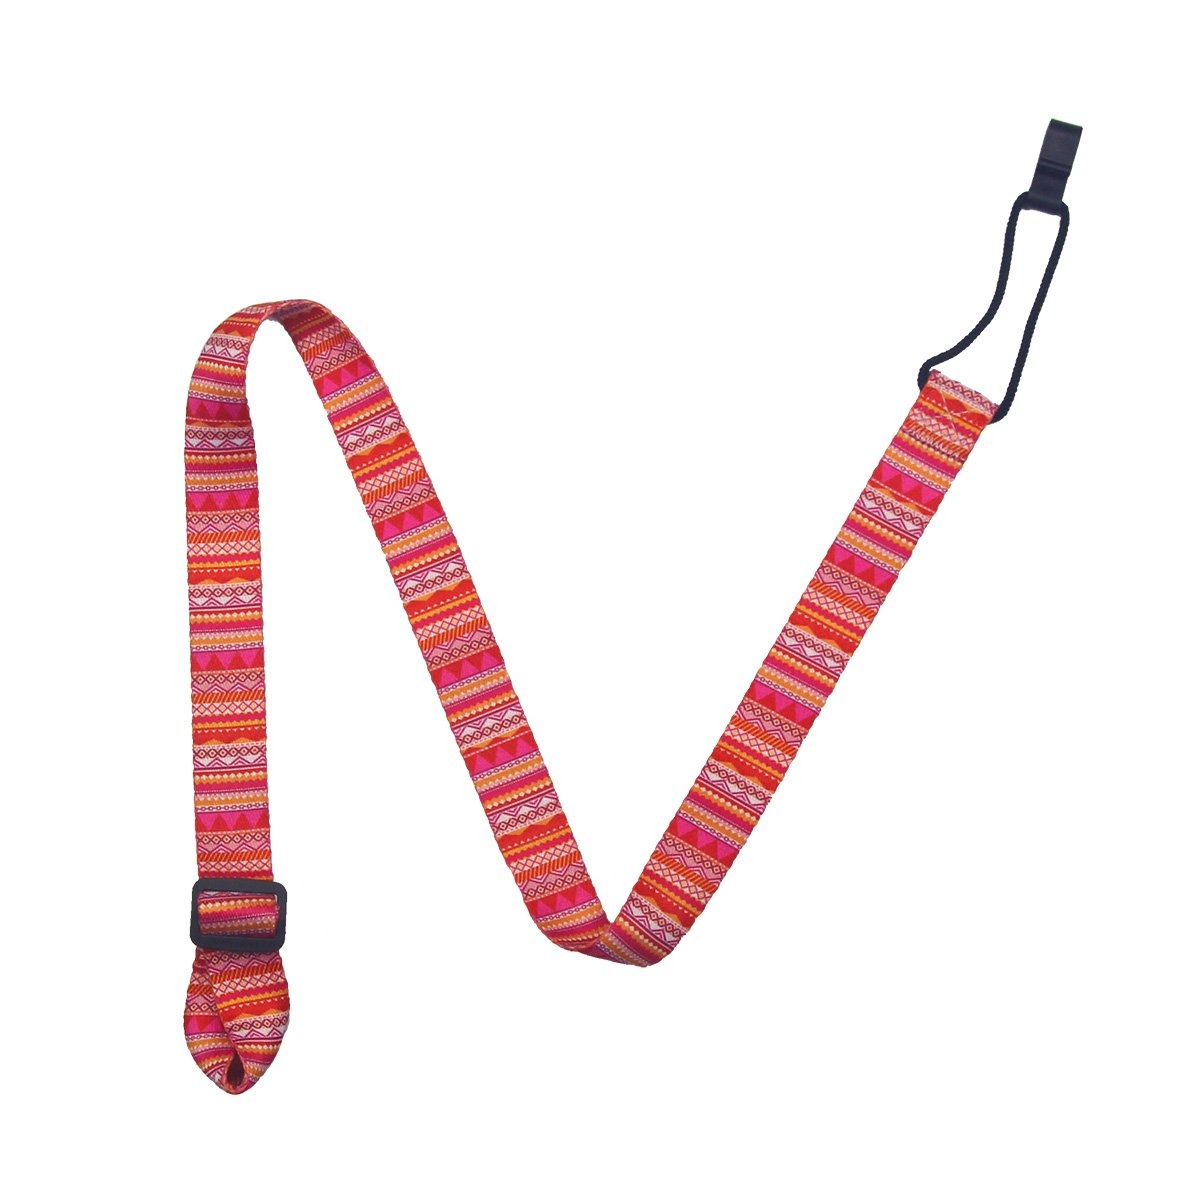 FLEOR Ukulele Strap Hook Polyester Adjustable | iknmusic